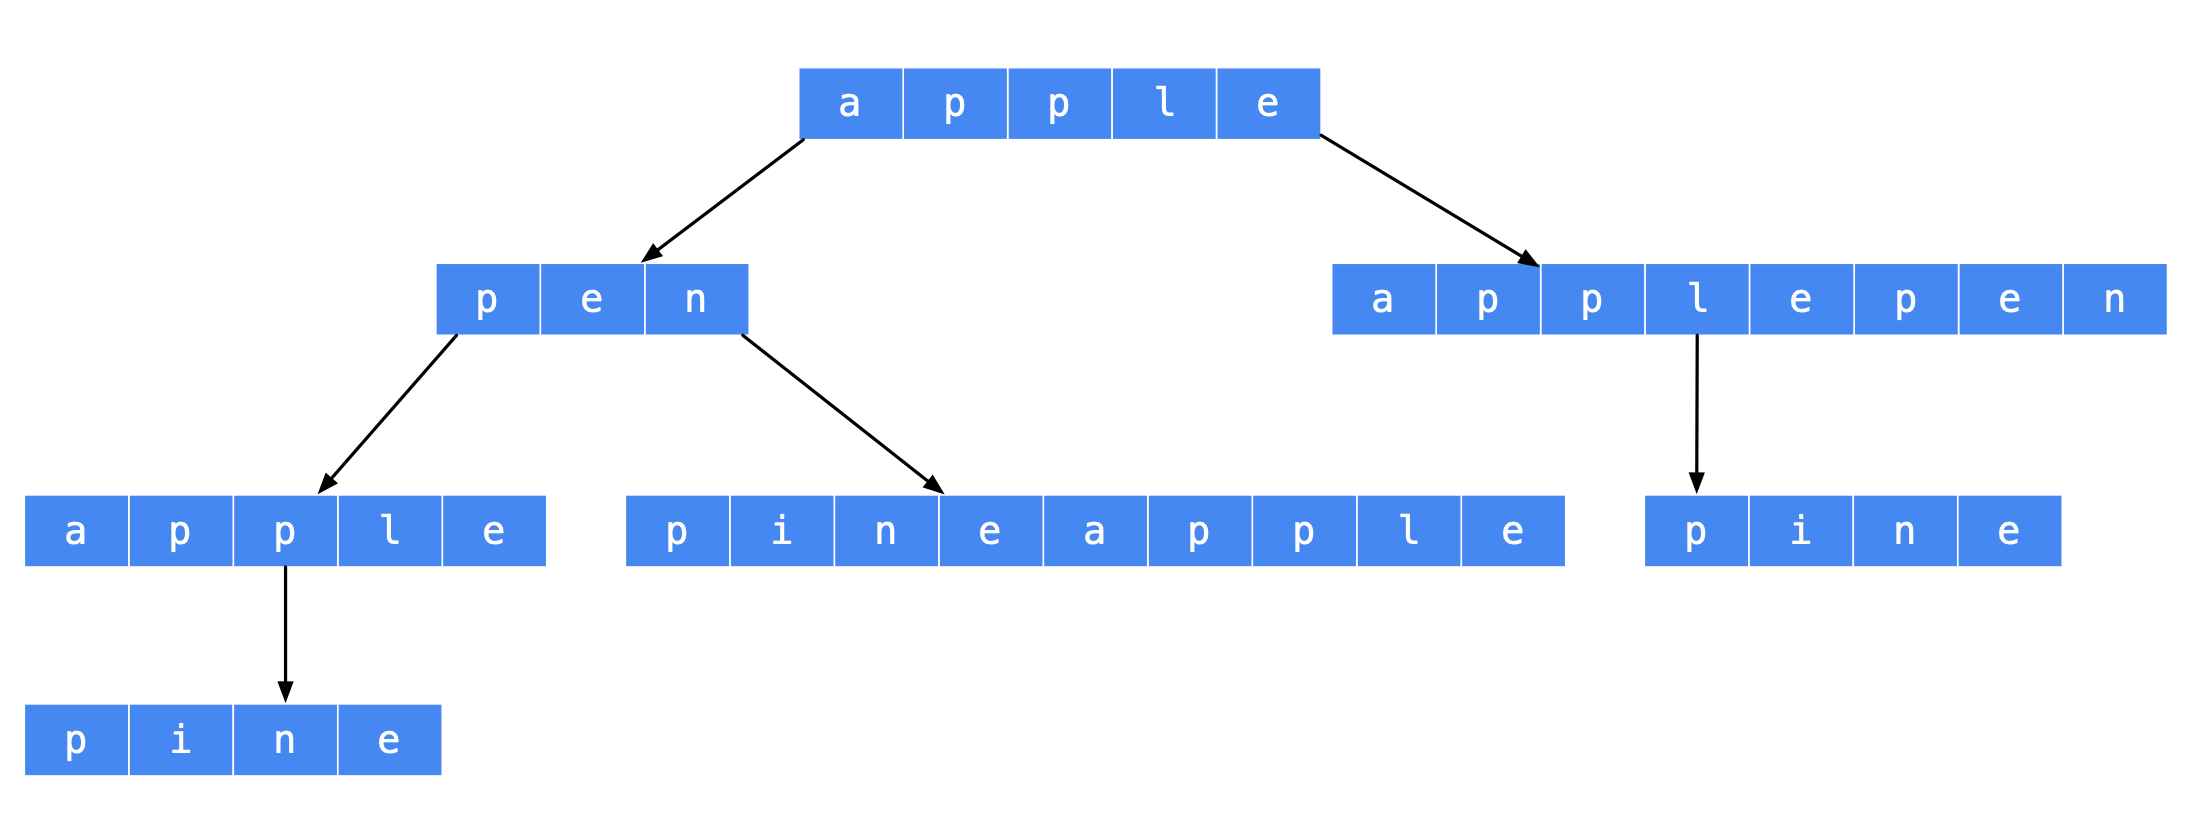 leetcode-140. 单词拆分 II  (字典树/dp + 回溯法) + 字节测开字典树算法题